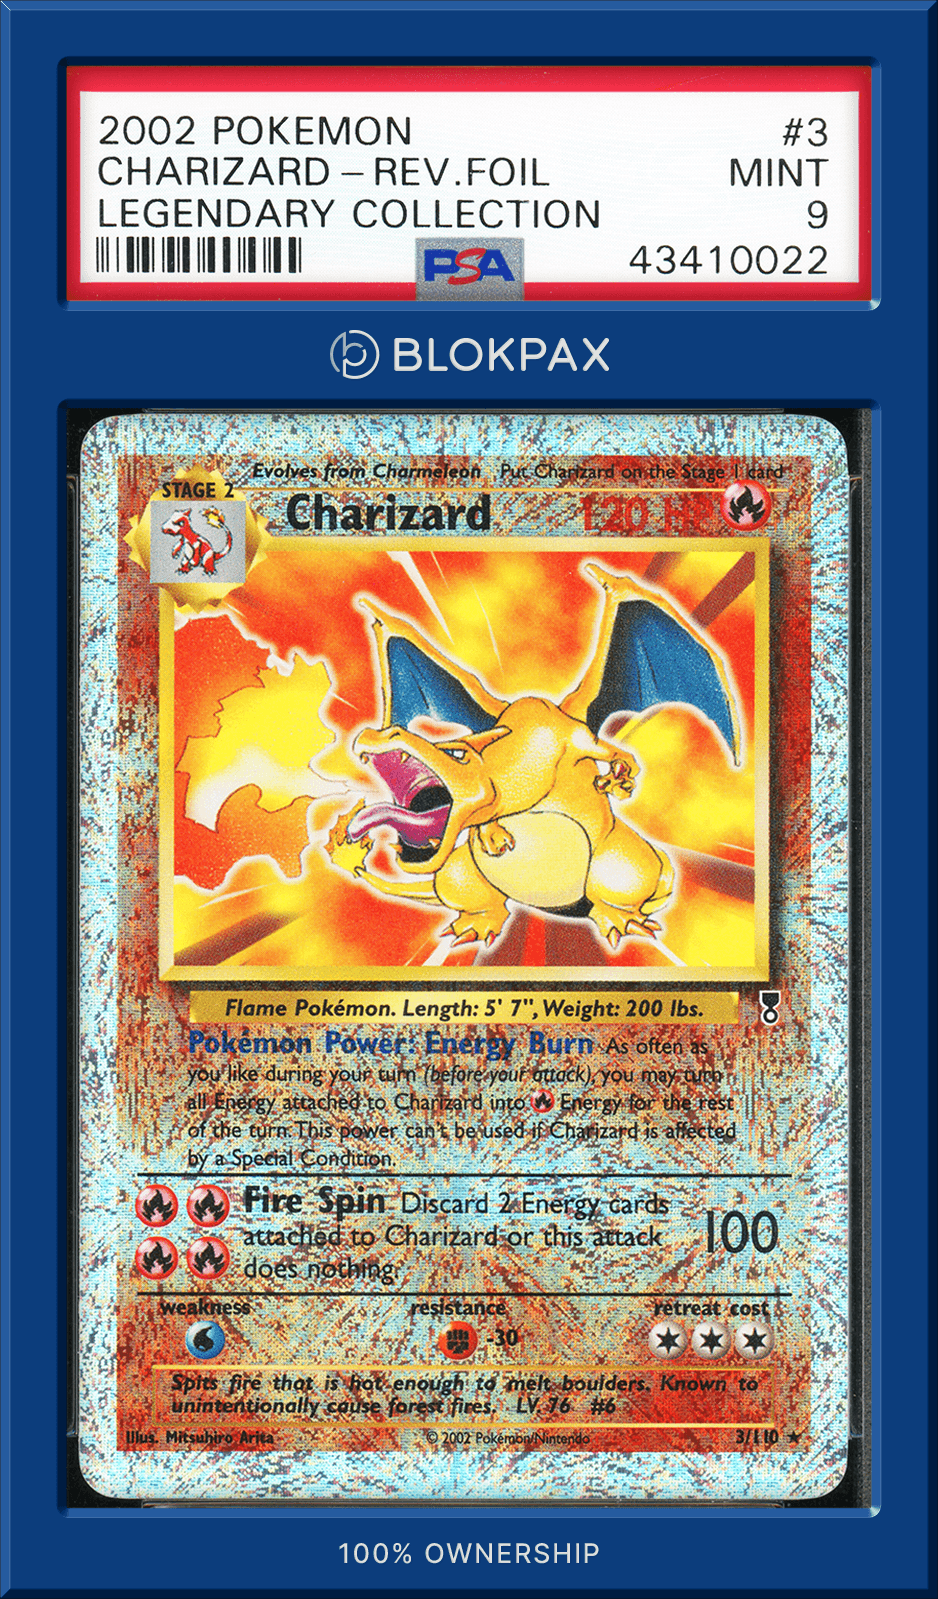 2002 Pokémon Charizard #3 - PSA 9 (Cert: 43410022)